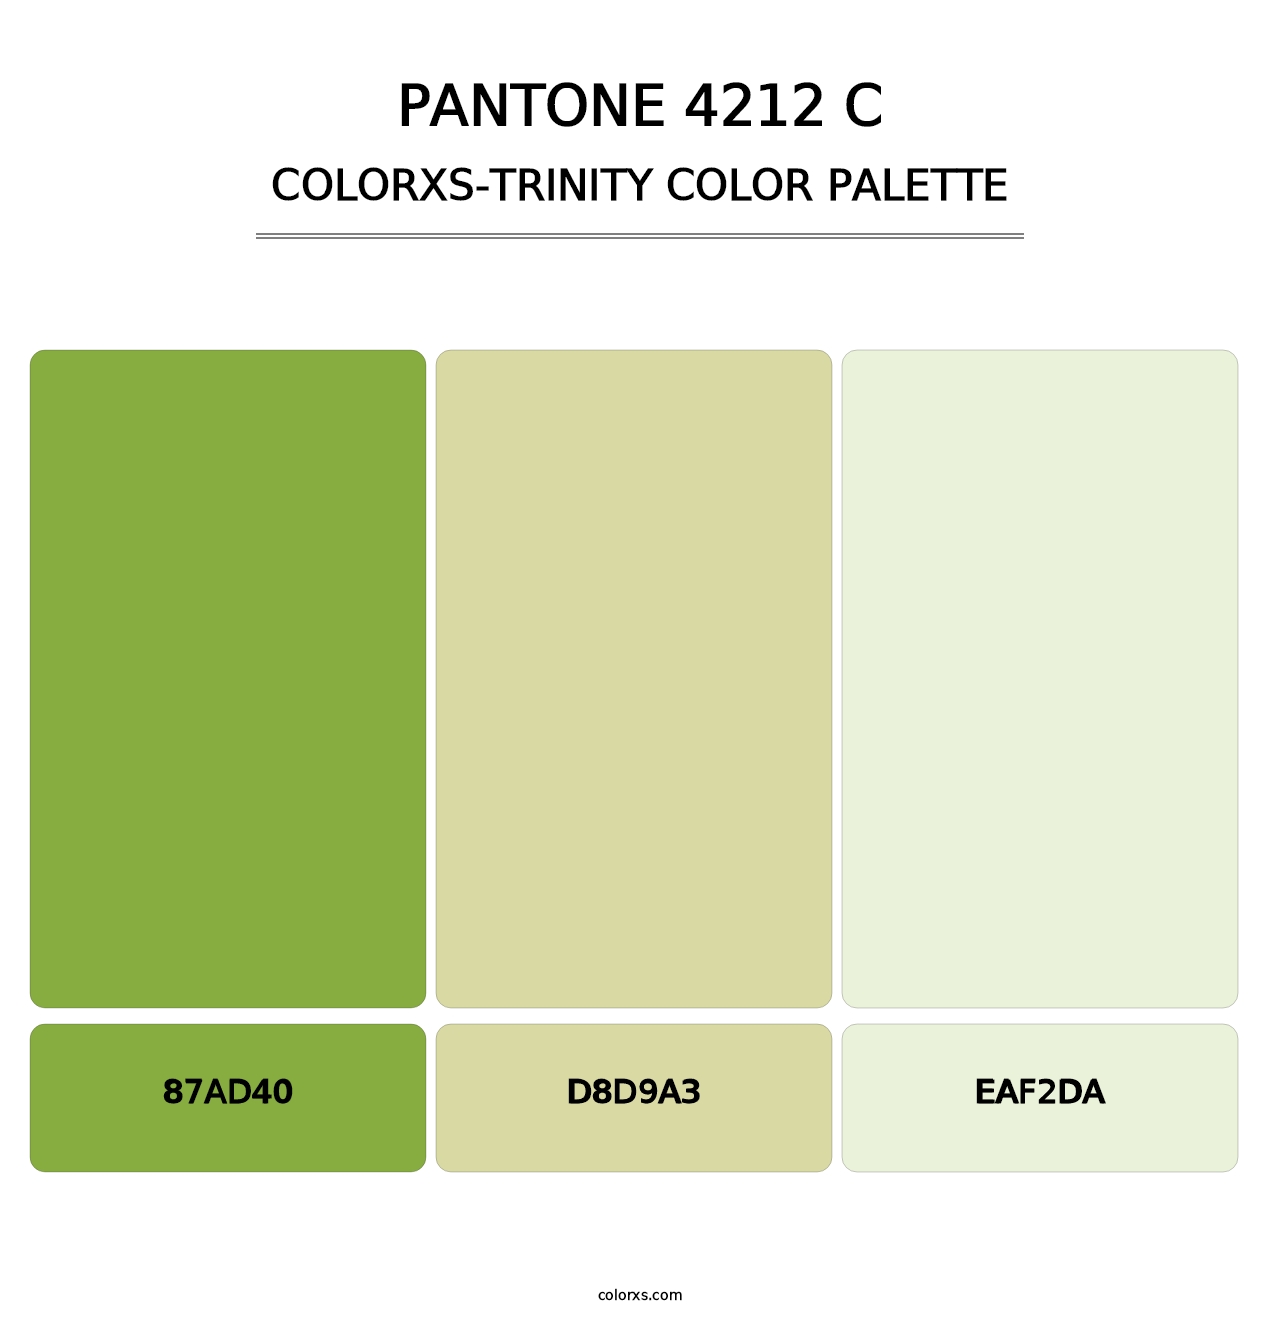 PANTONE 4212 C - Colorxs Trinity Palette